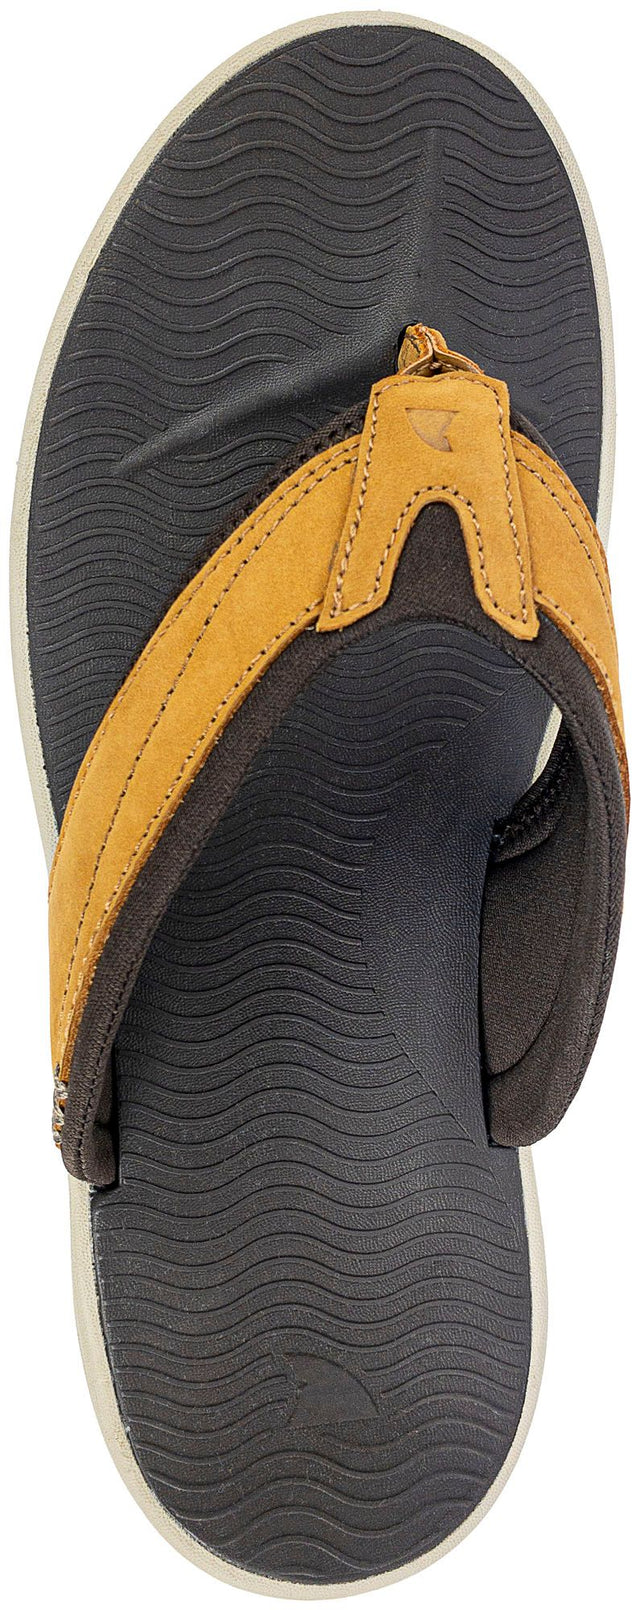 Men's Kariba Leather Boat Sandal